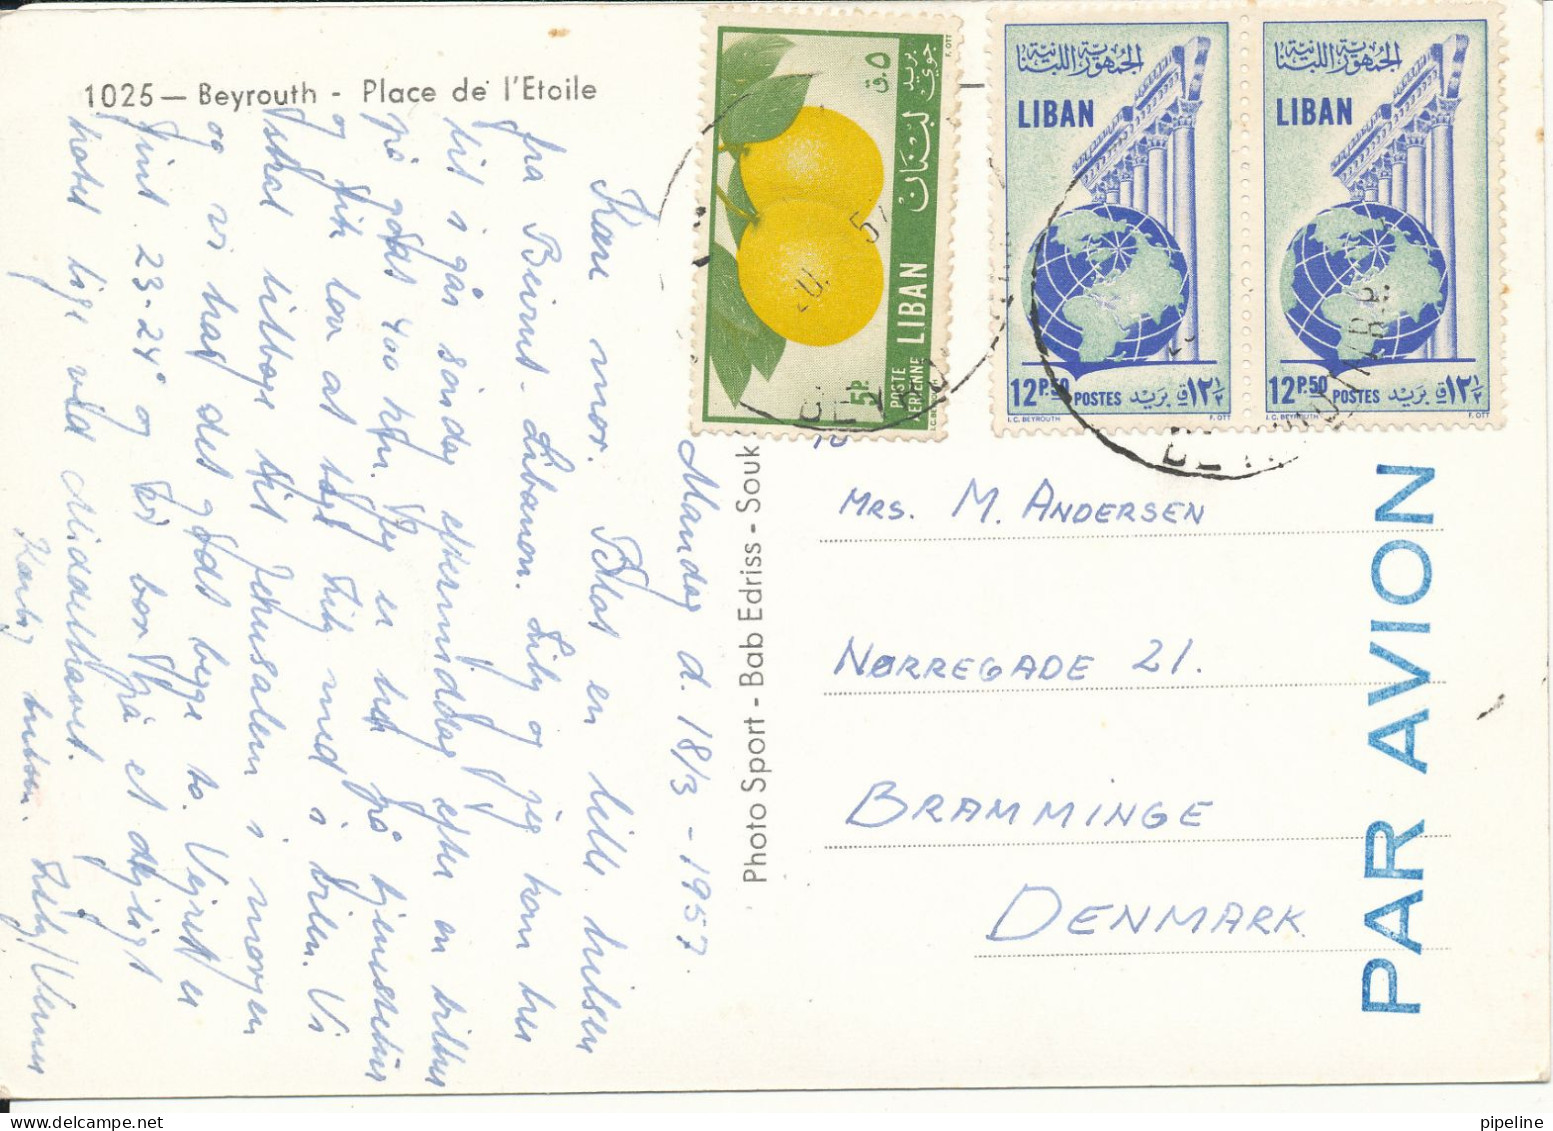 Lebanon Postcard Sent To Denmark Beyrouth 18-3-1957 (Beyrouth Place De L'Etoile) - Liban